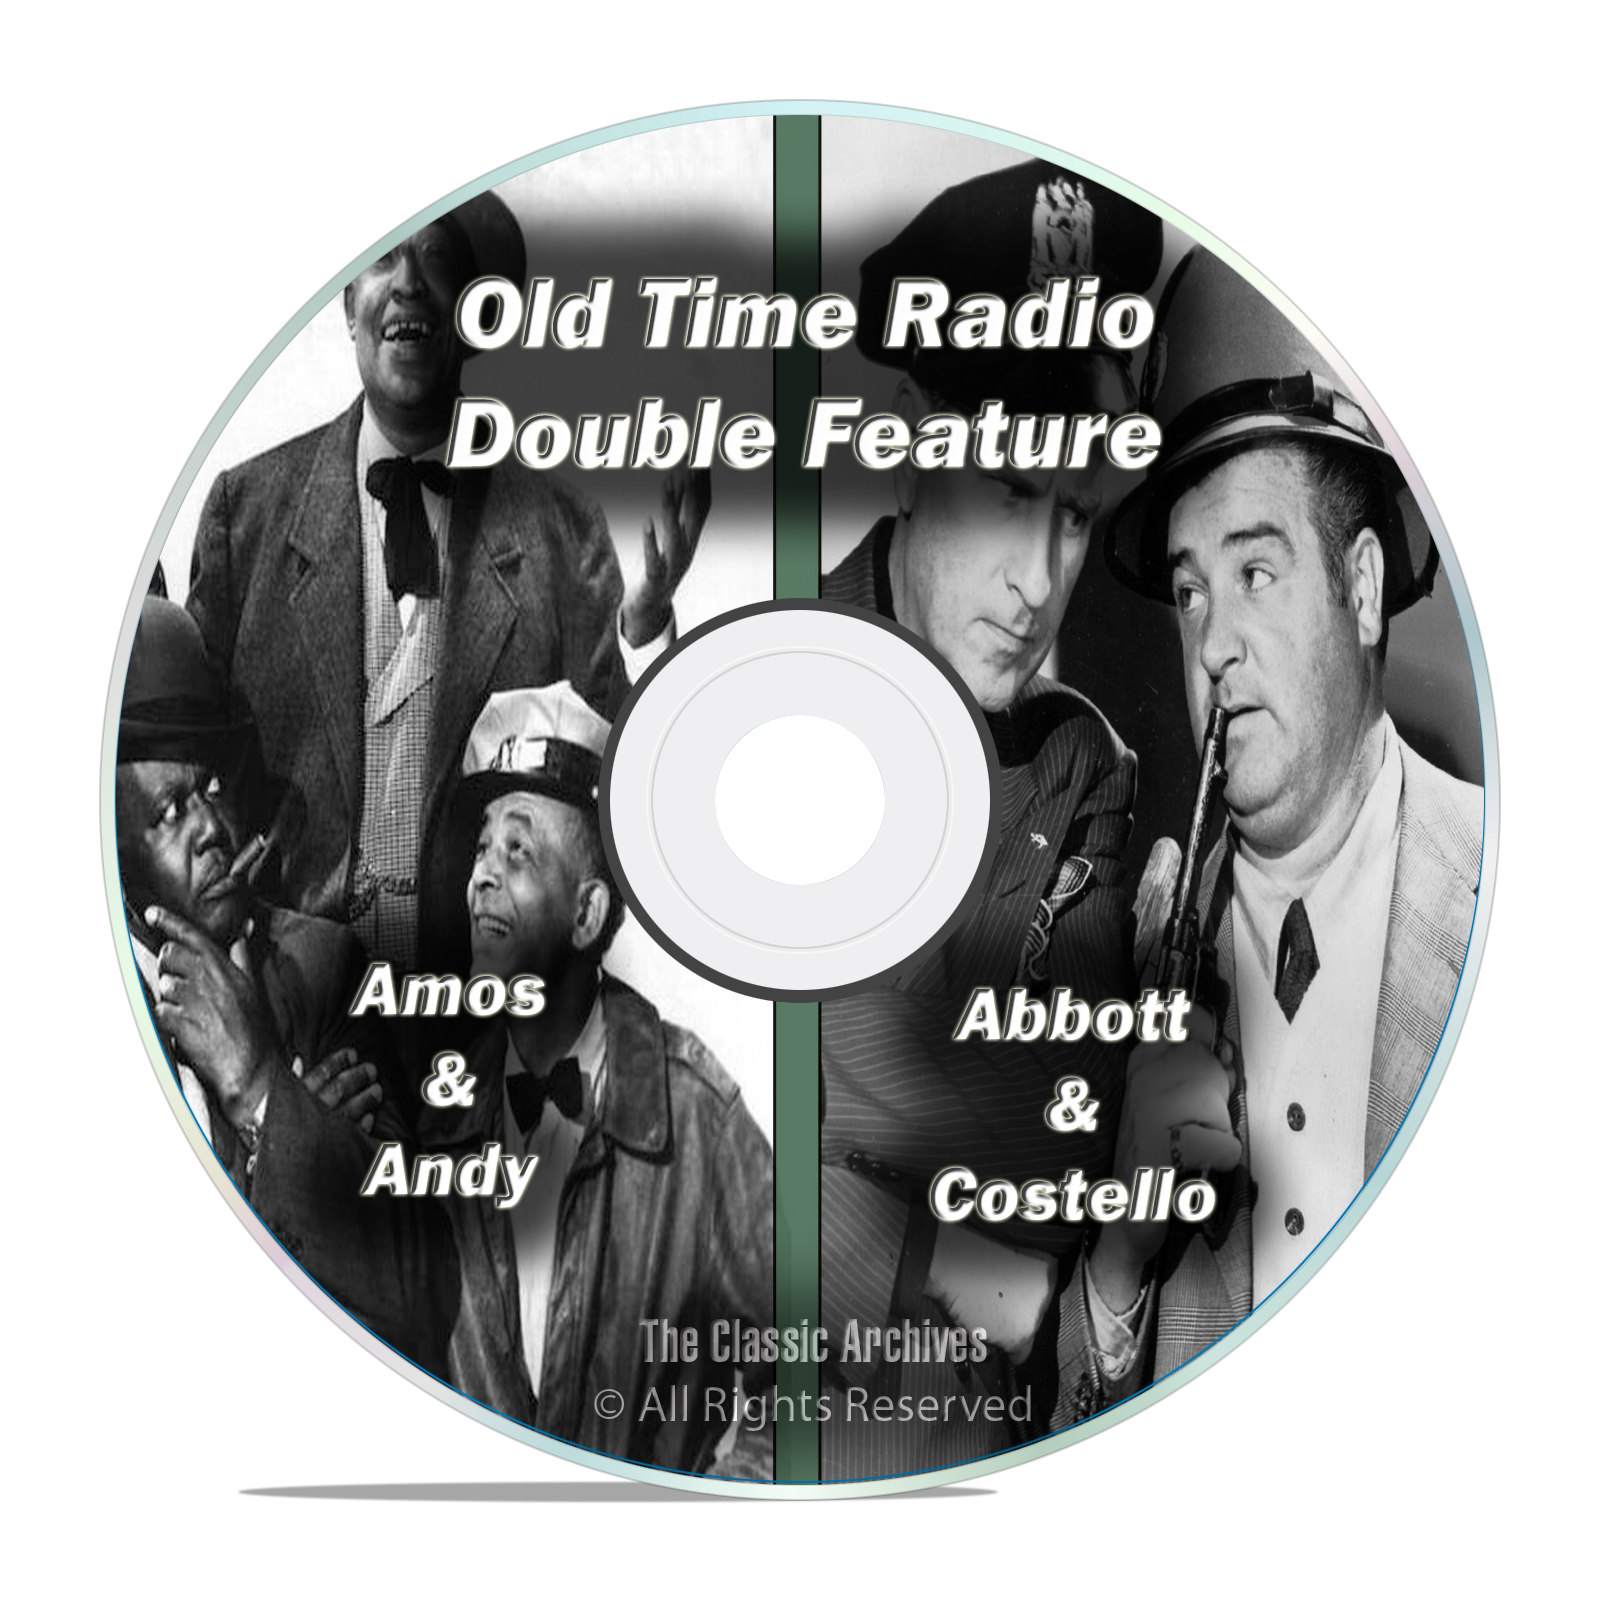 Amos & Andy, Abbott & Costello, 707 FULL RUN COMPLETE SHOWS, OTR MP3 DVD